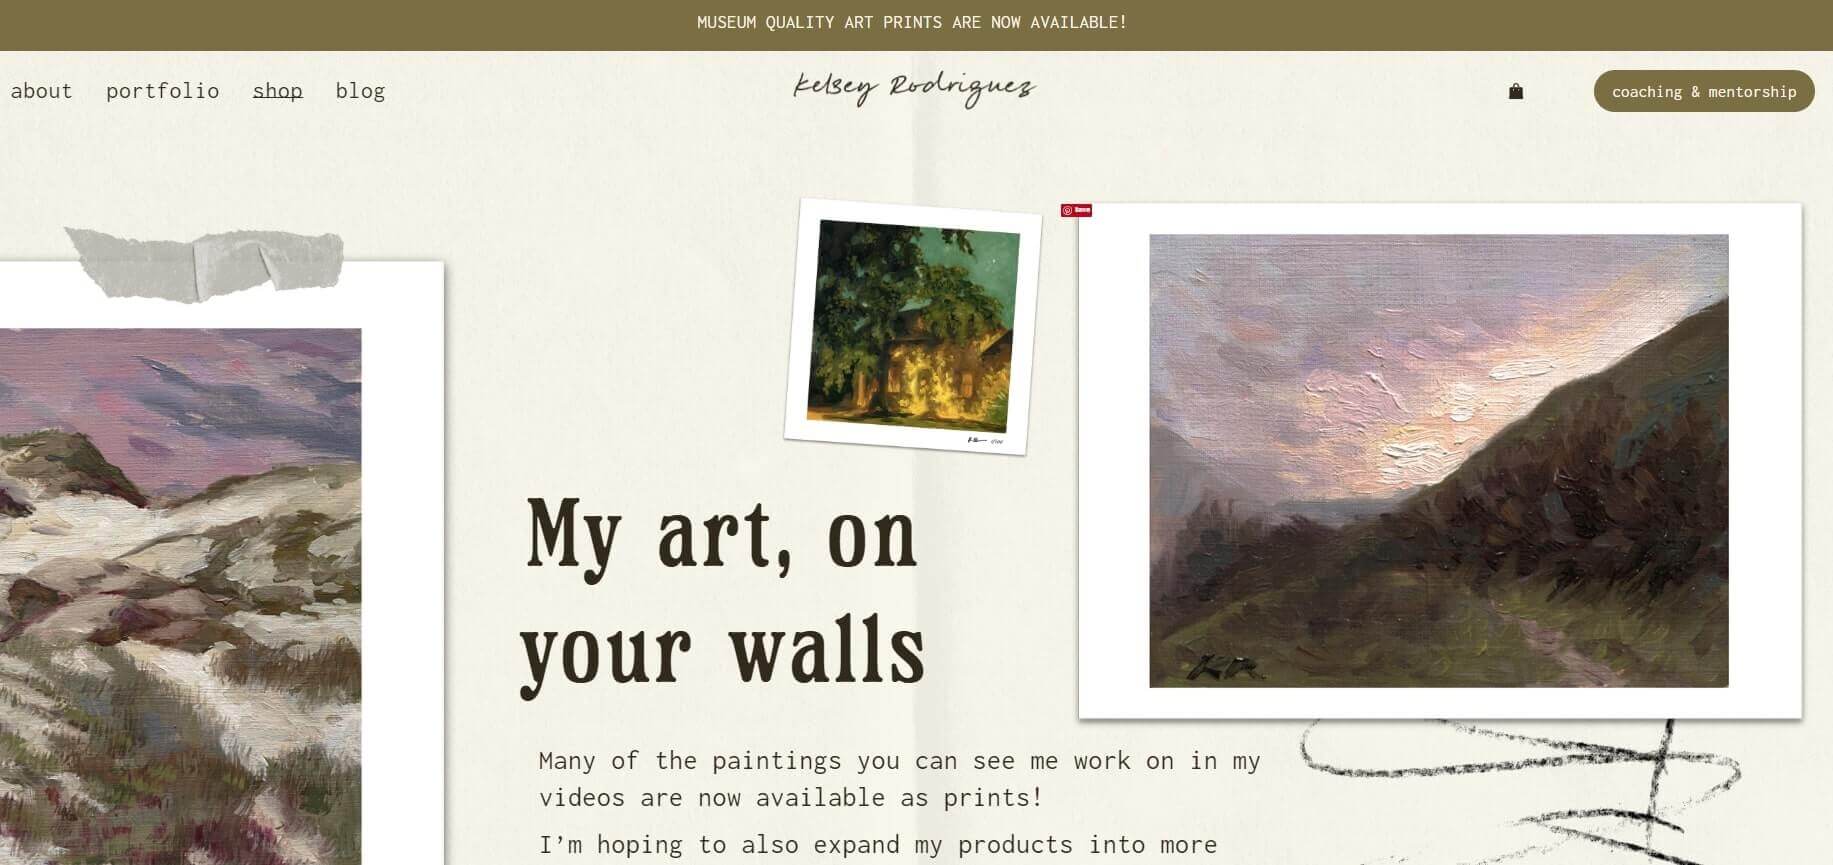 A screenshot of Kelsey Rodriquez's website showcasing her art and prints.